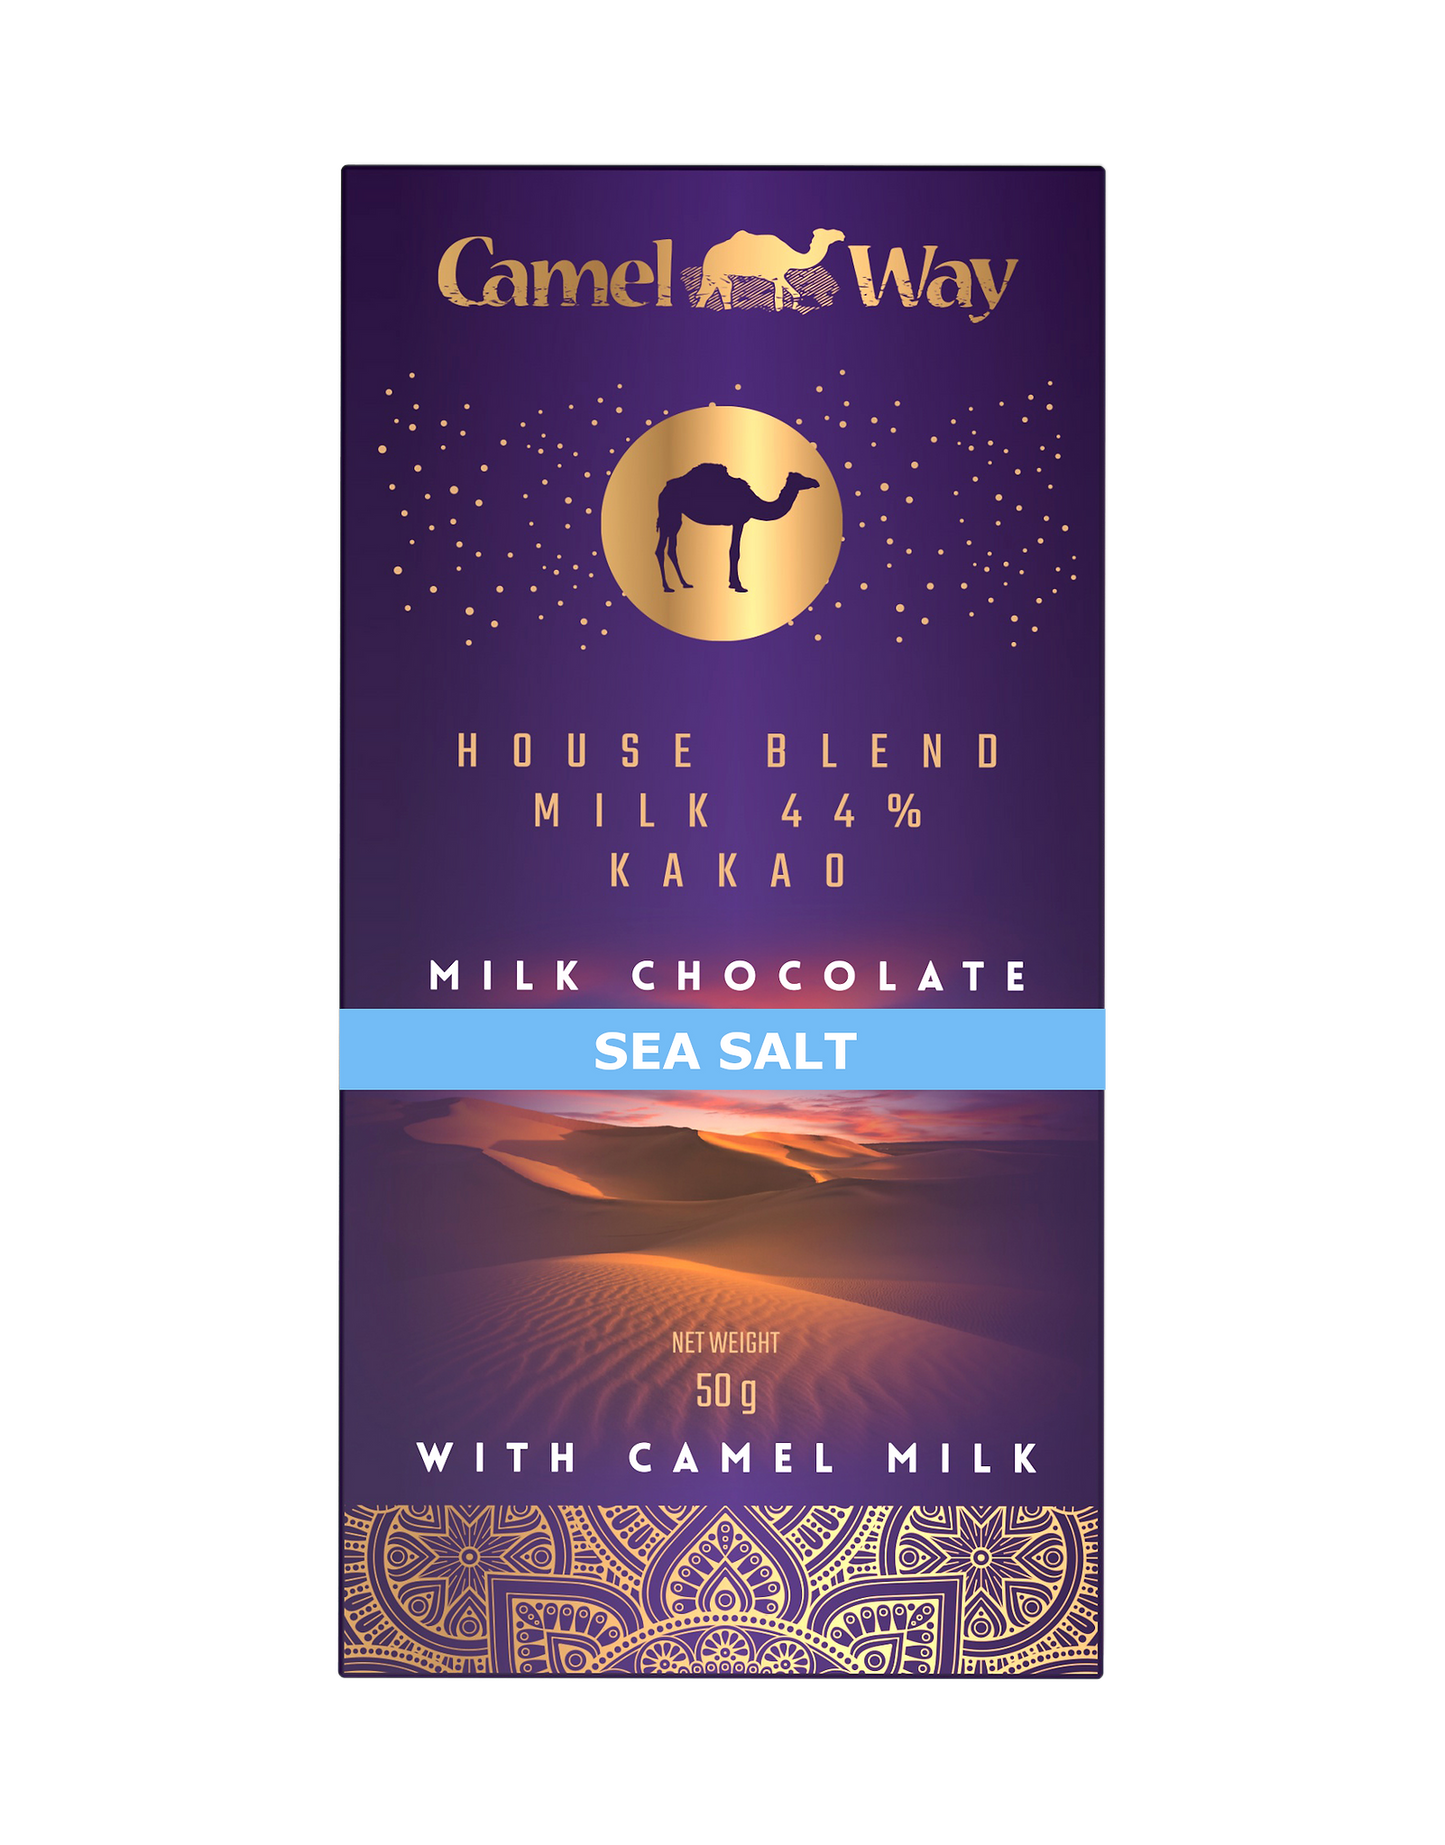 Handmade Camel Milk Chocolate - With Sea Salt -  50g. 44% Kakao.